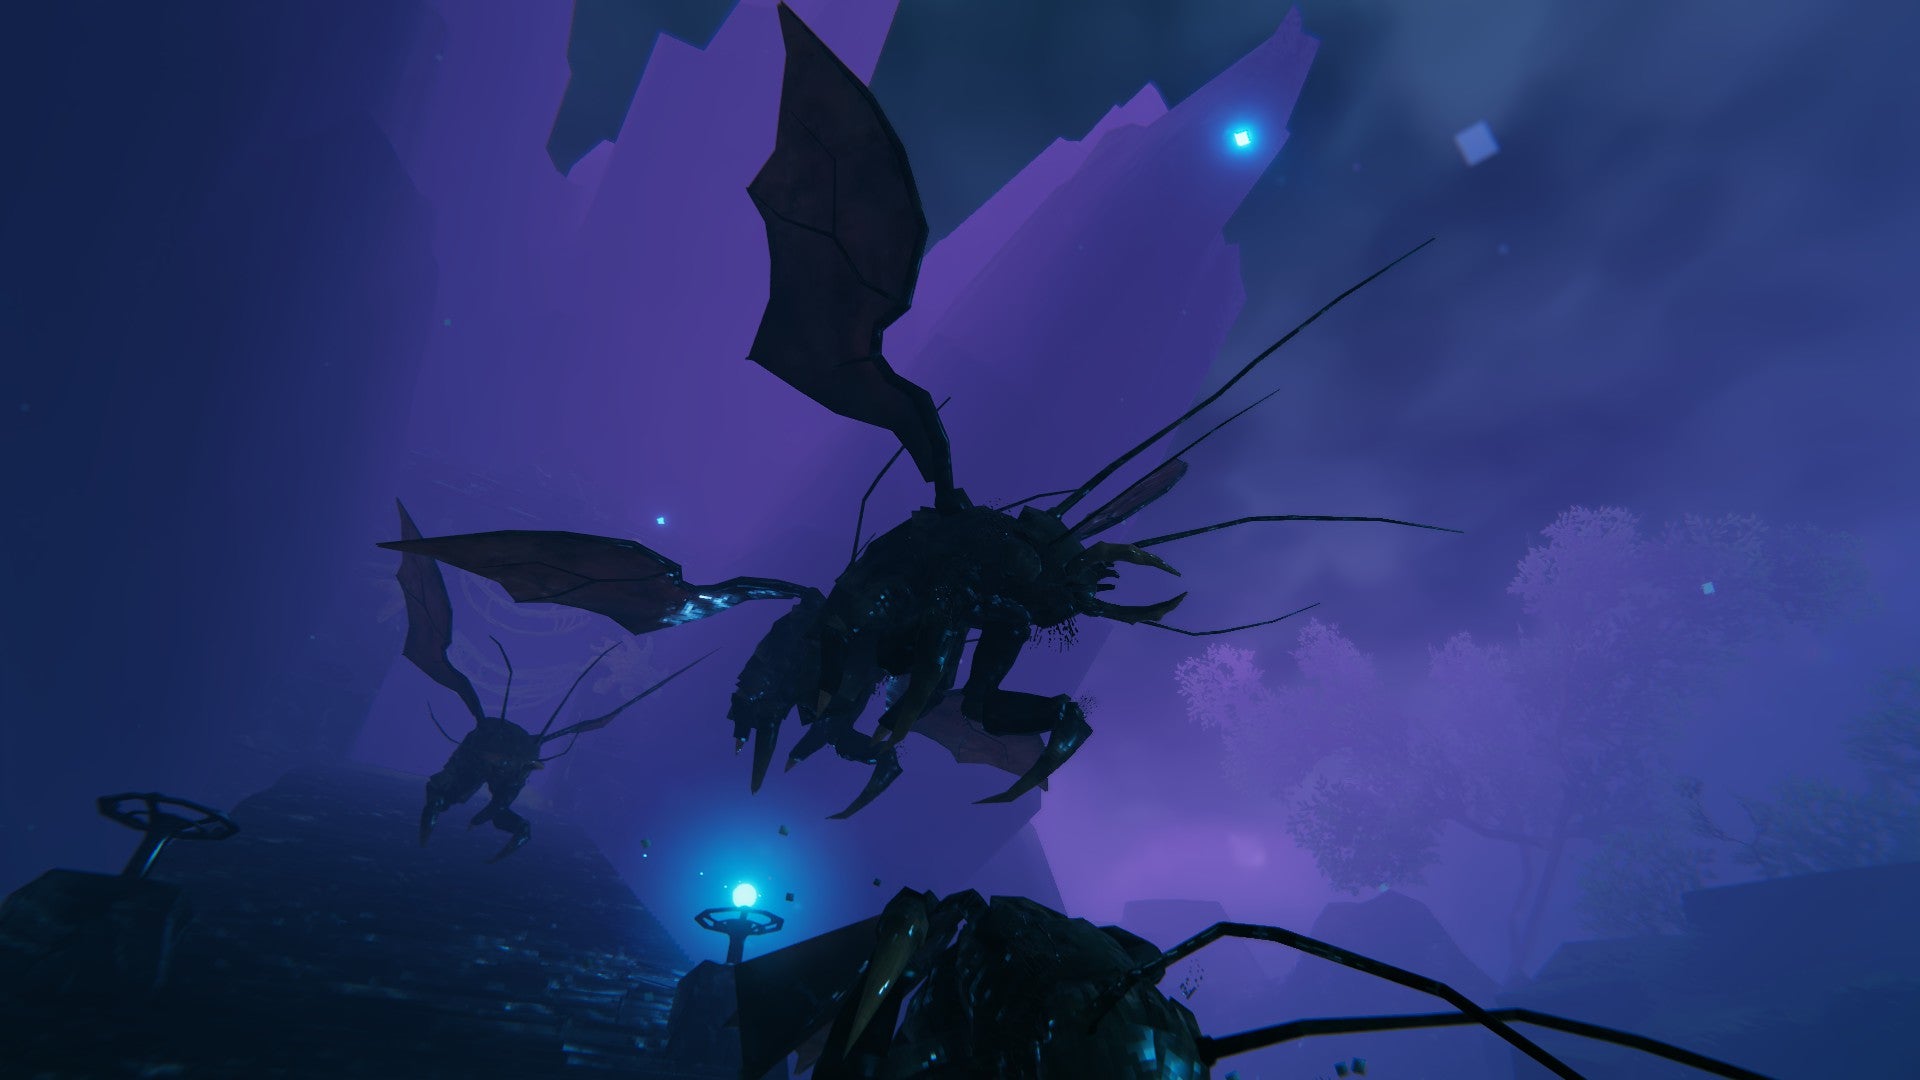 Valheim Mistlands - giant enemy ants fly, silhouetted across a purple sky